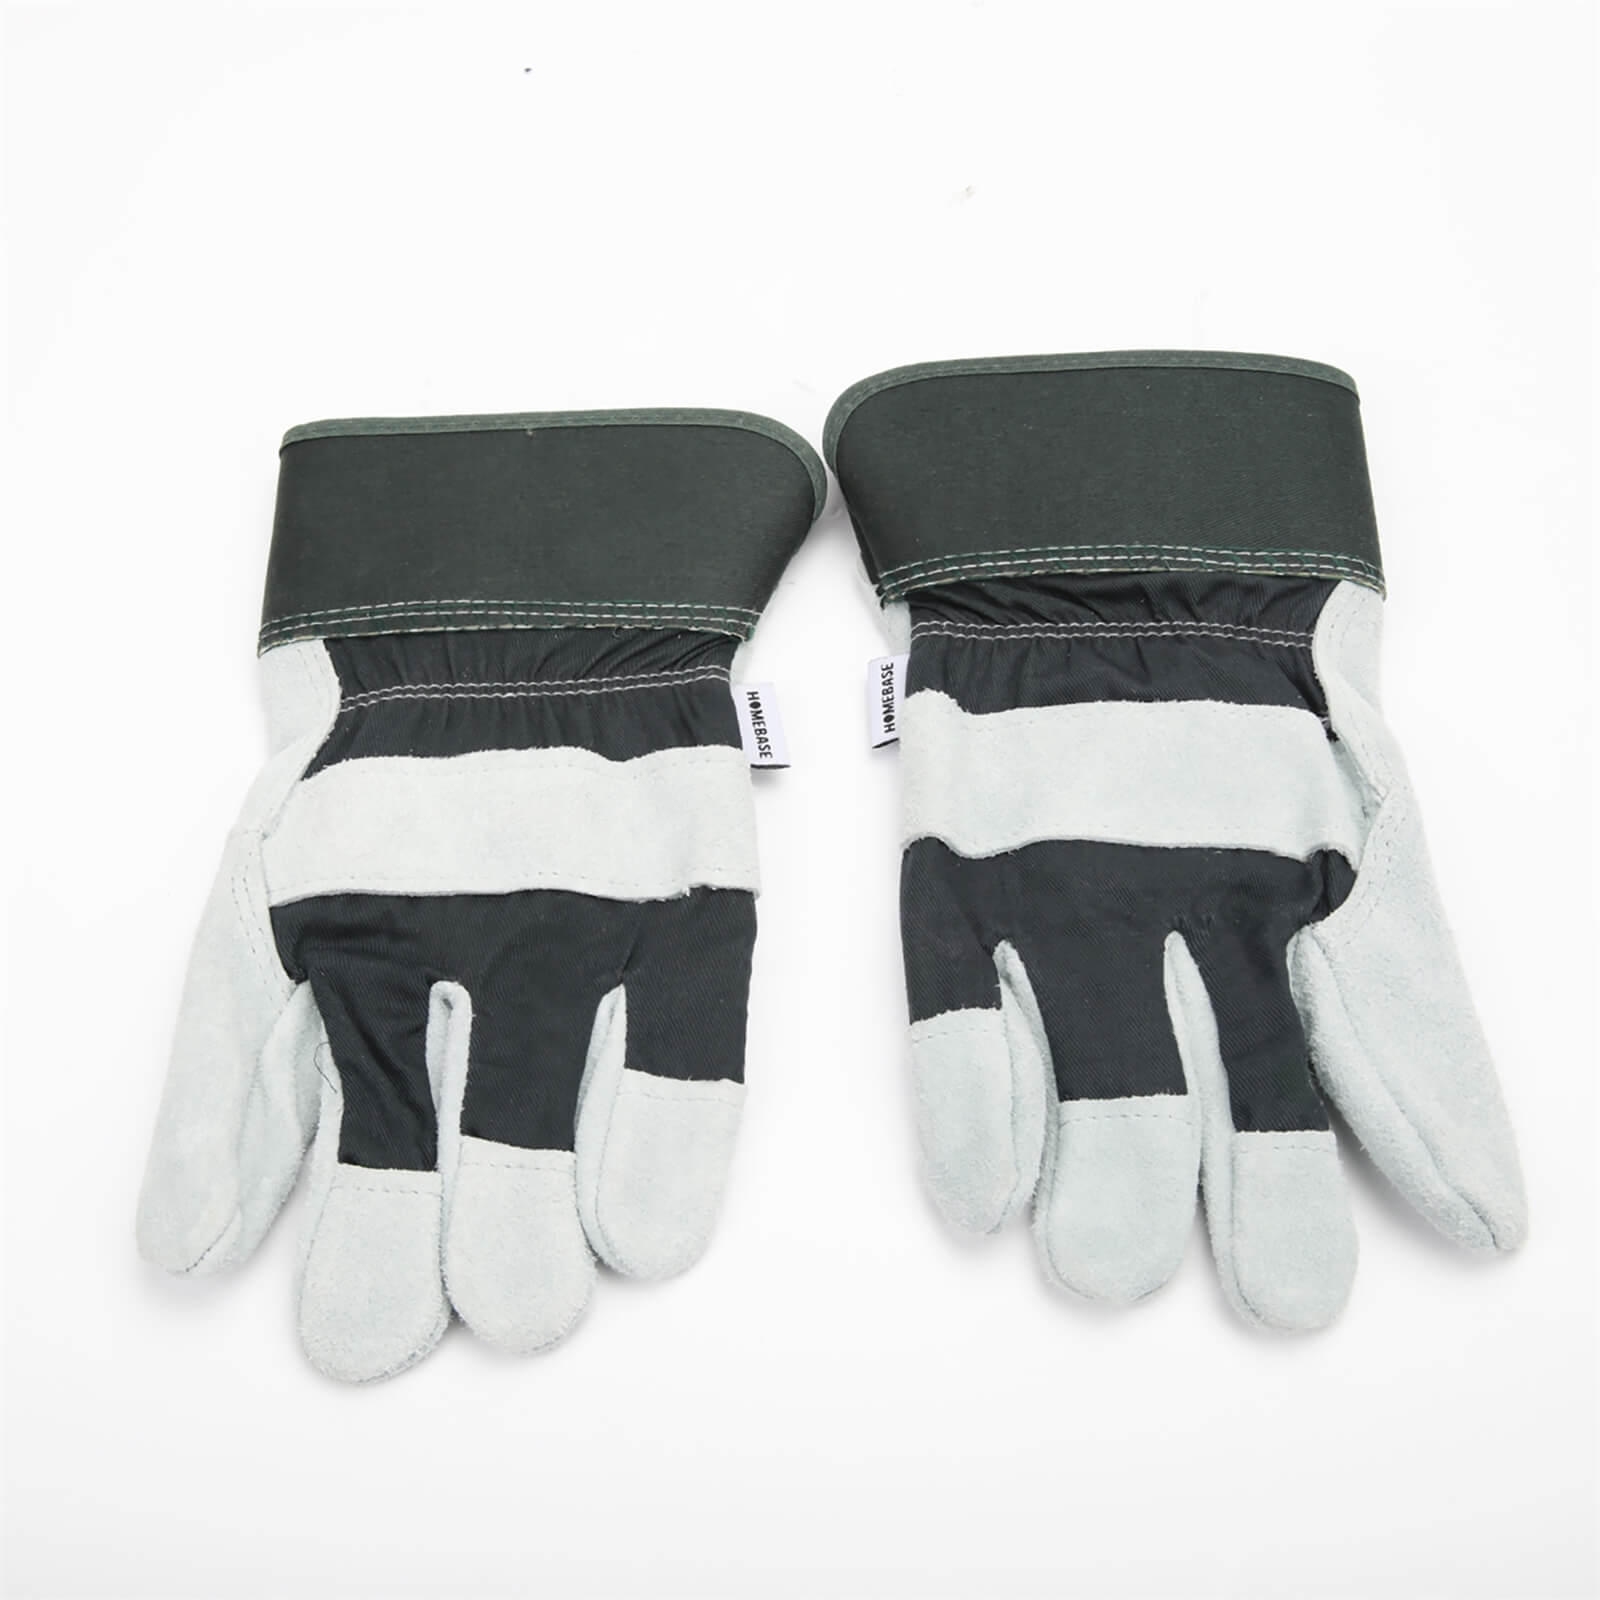 Homebase Classic Rigger Gloves - Medium